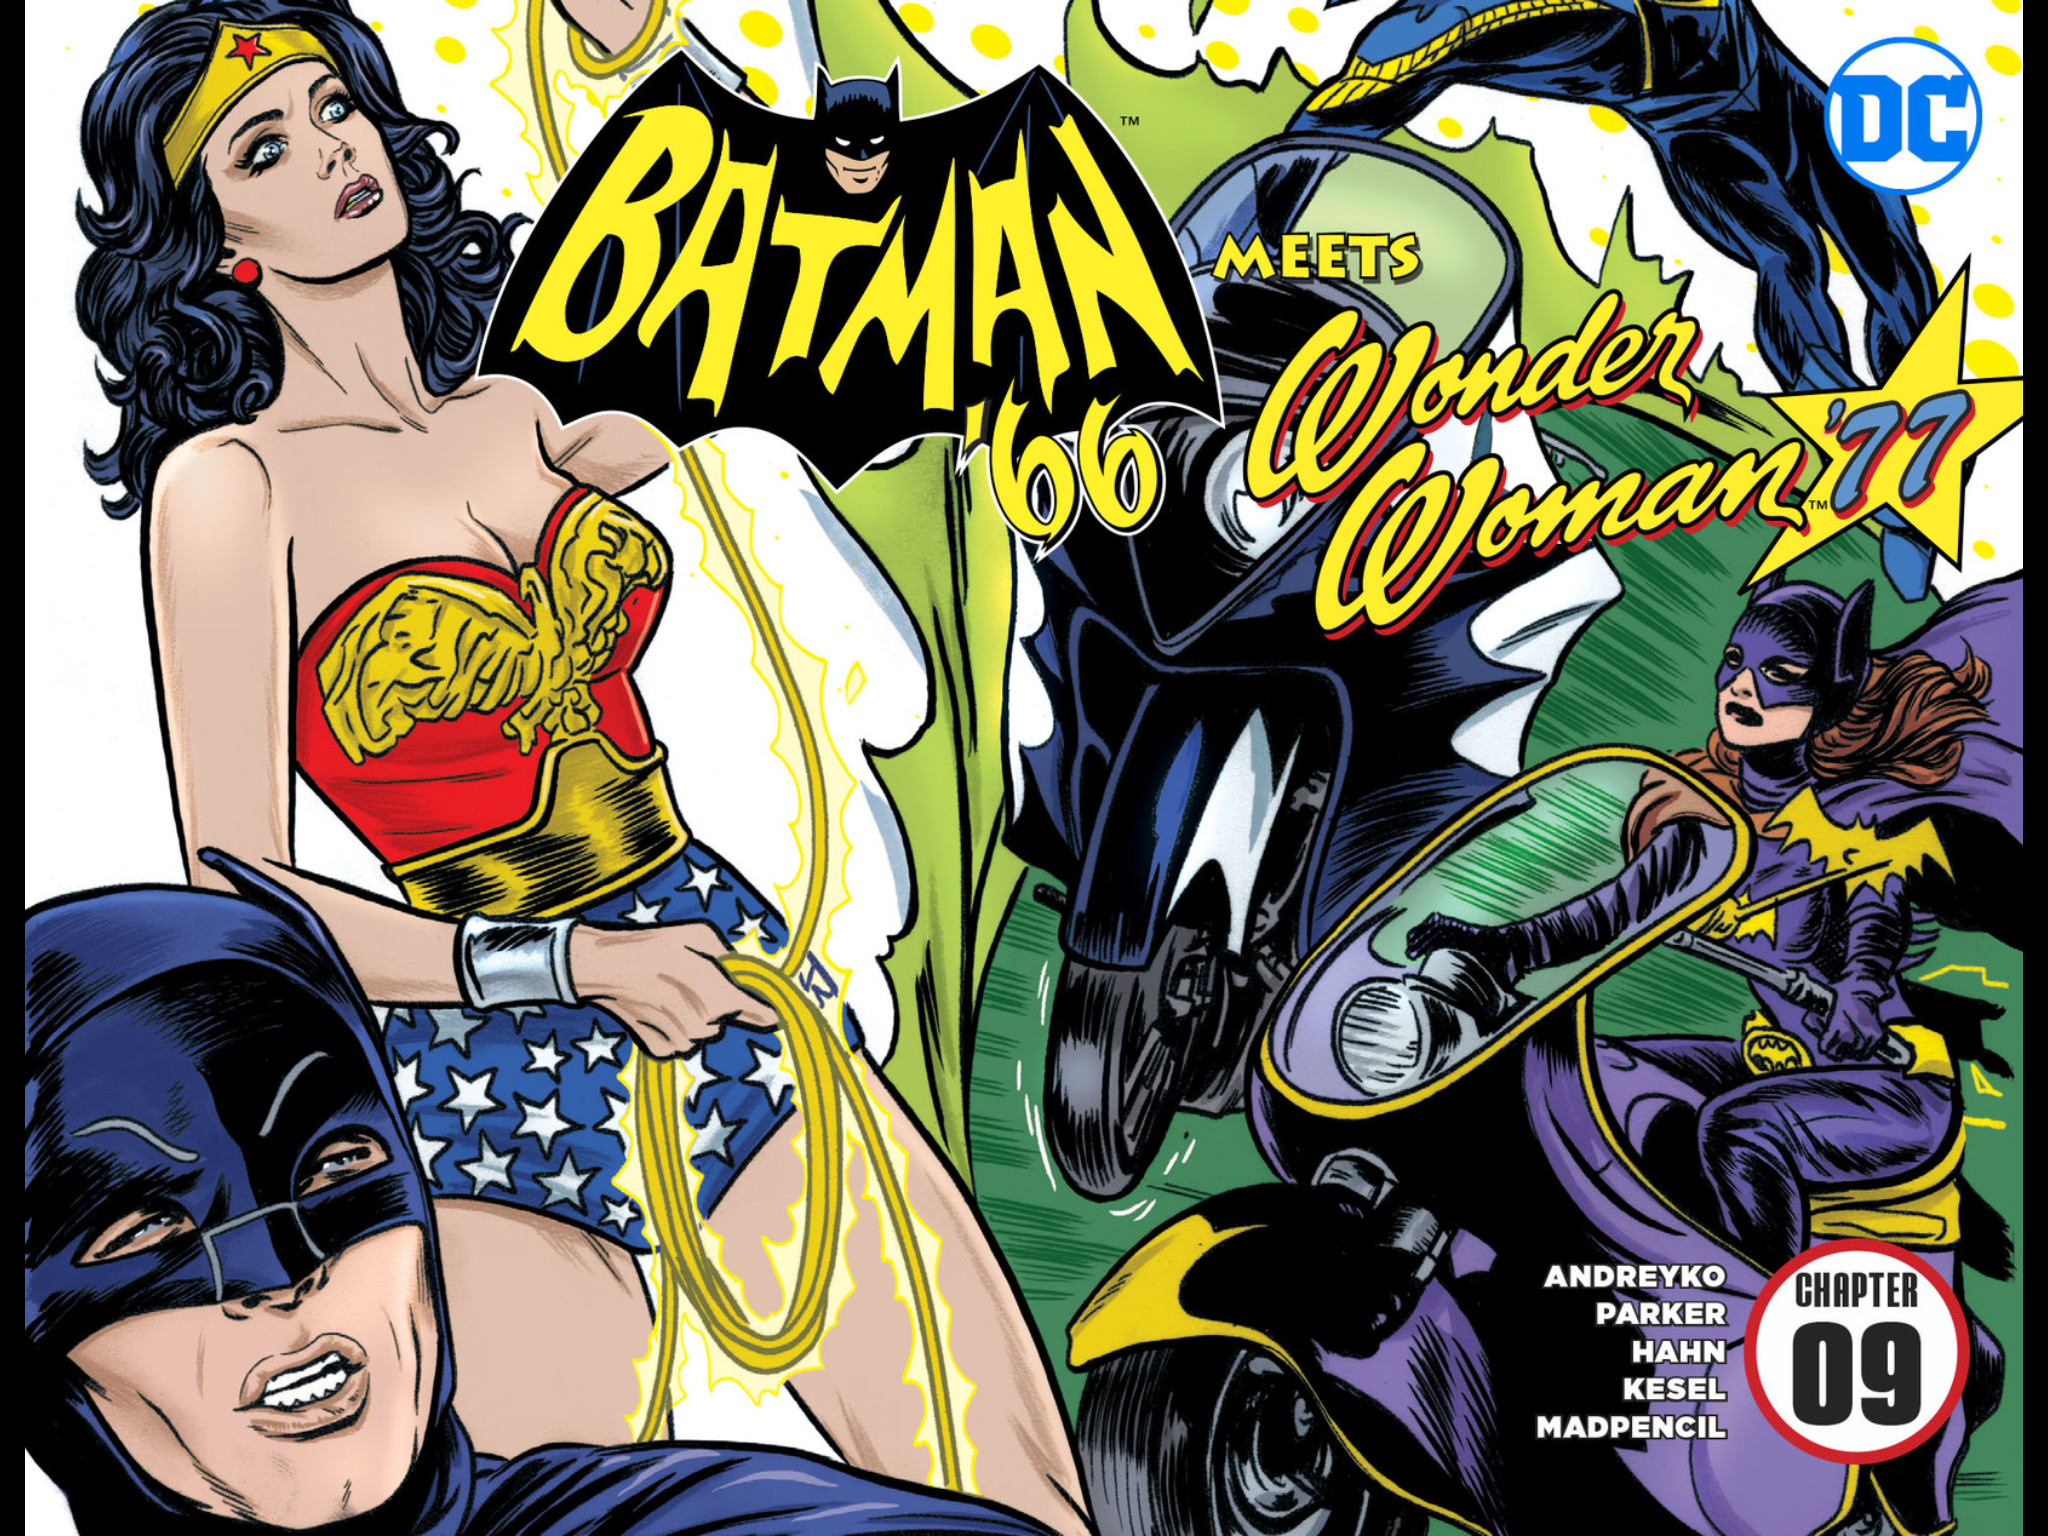 2048x1536 Batman '66 meets Wonder Woman '77 #9